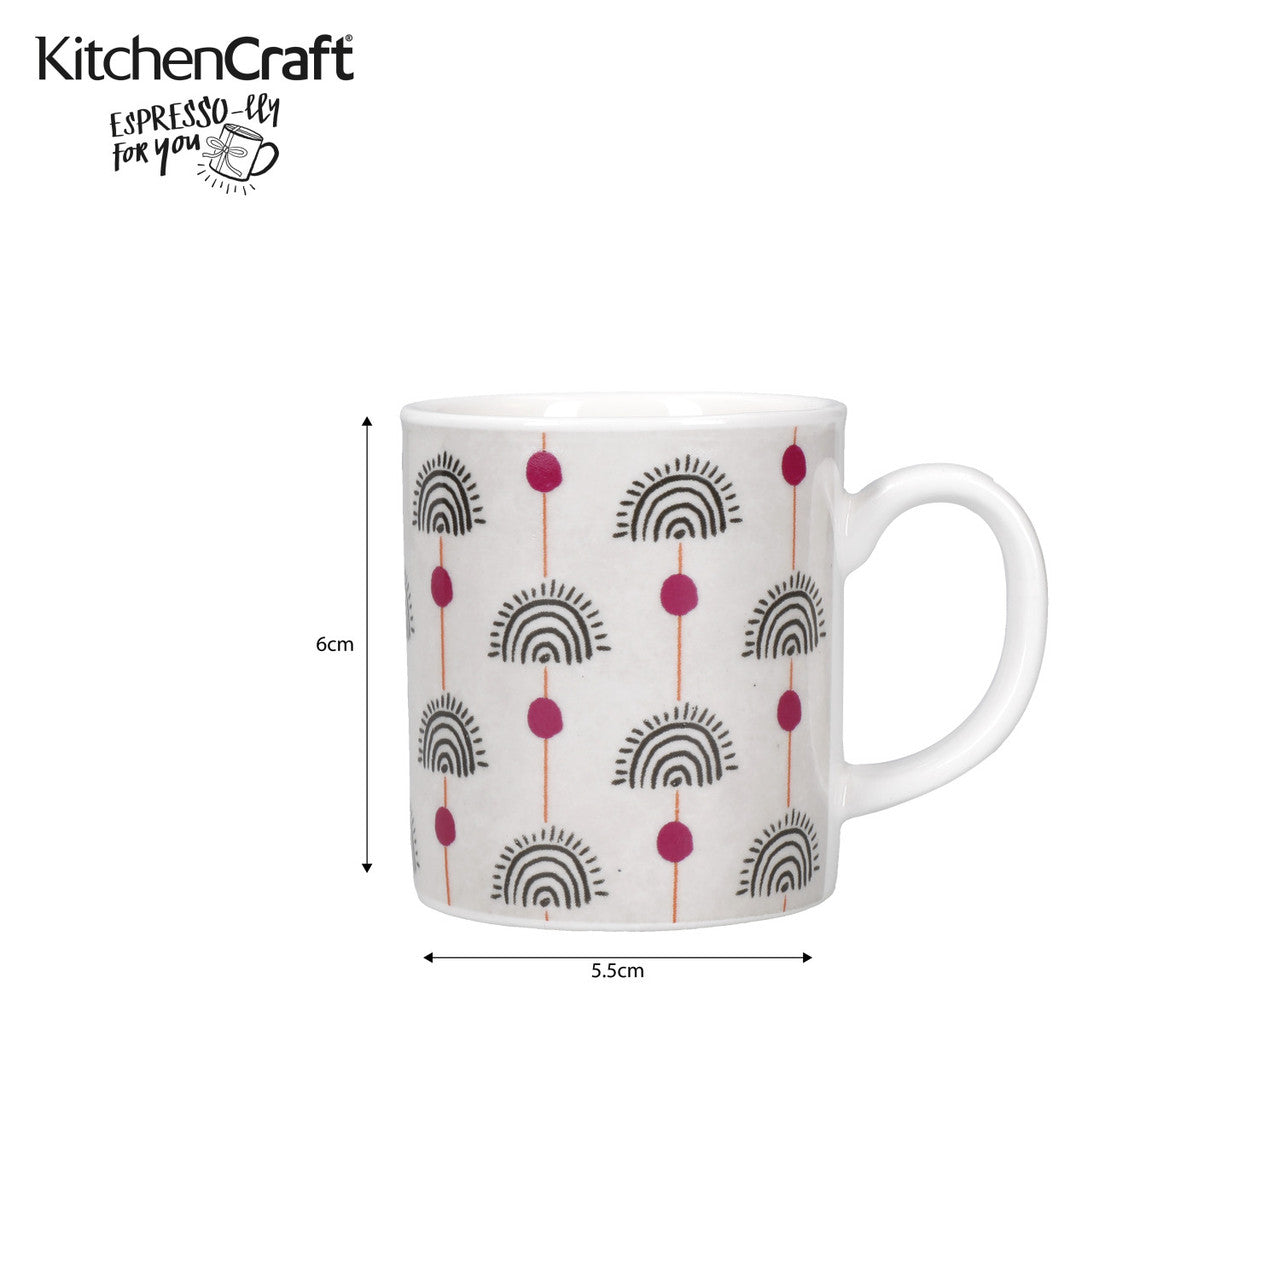 KitchenCraft Espresso Mug Exotic Rainbow Design